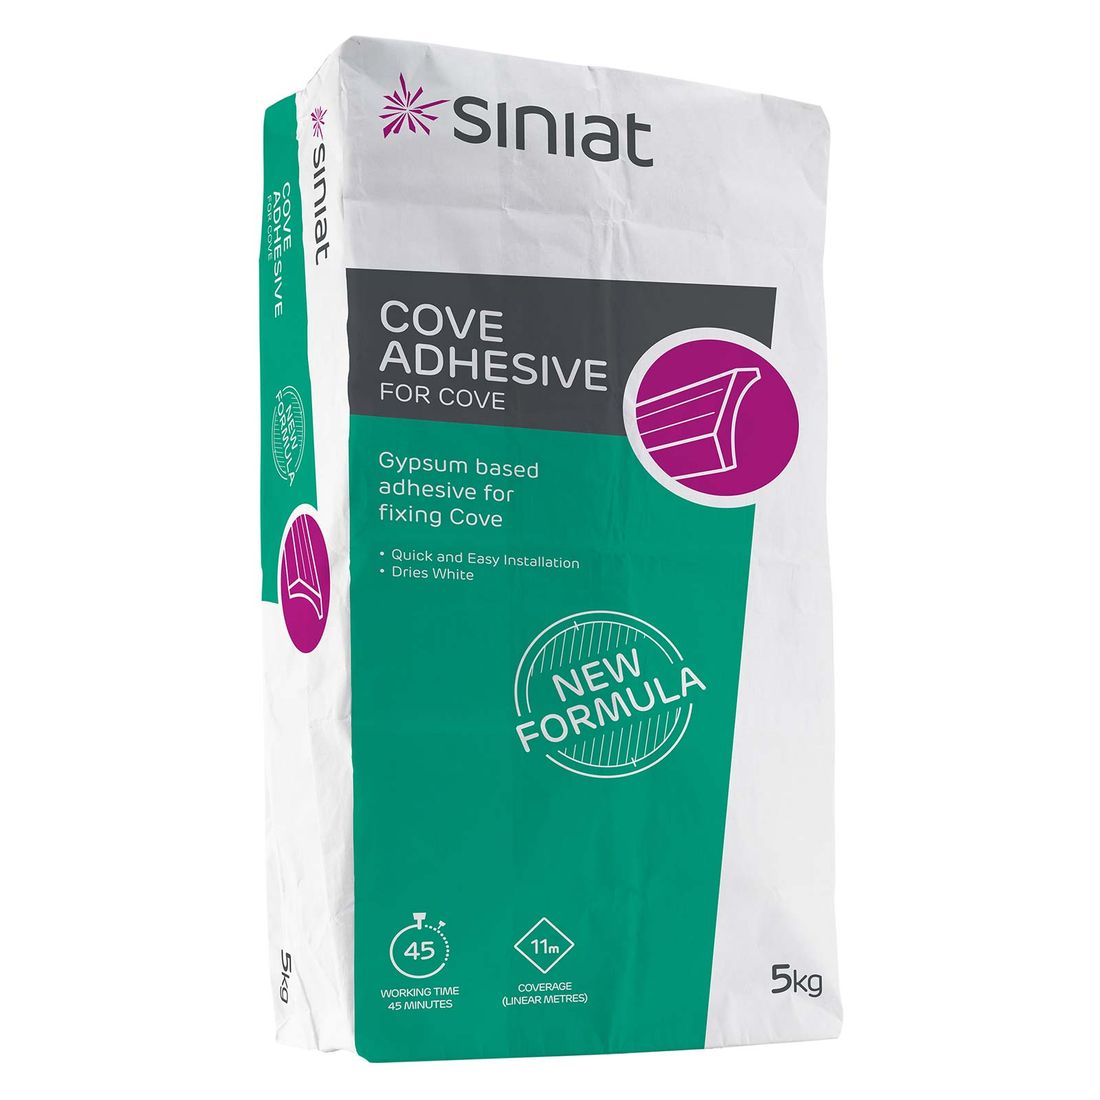 Siniat Cove Adhesive 5Kg Gypsum Based